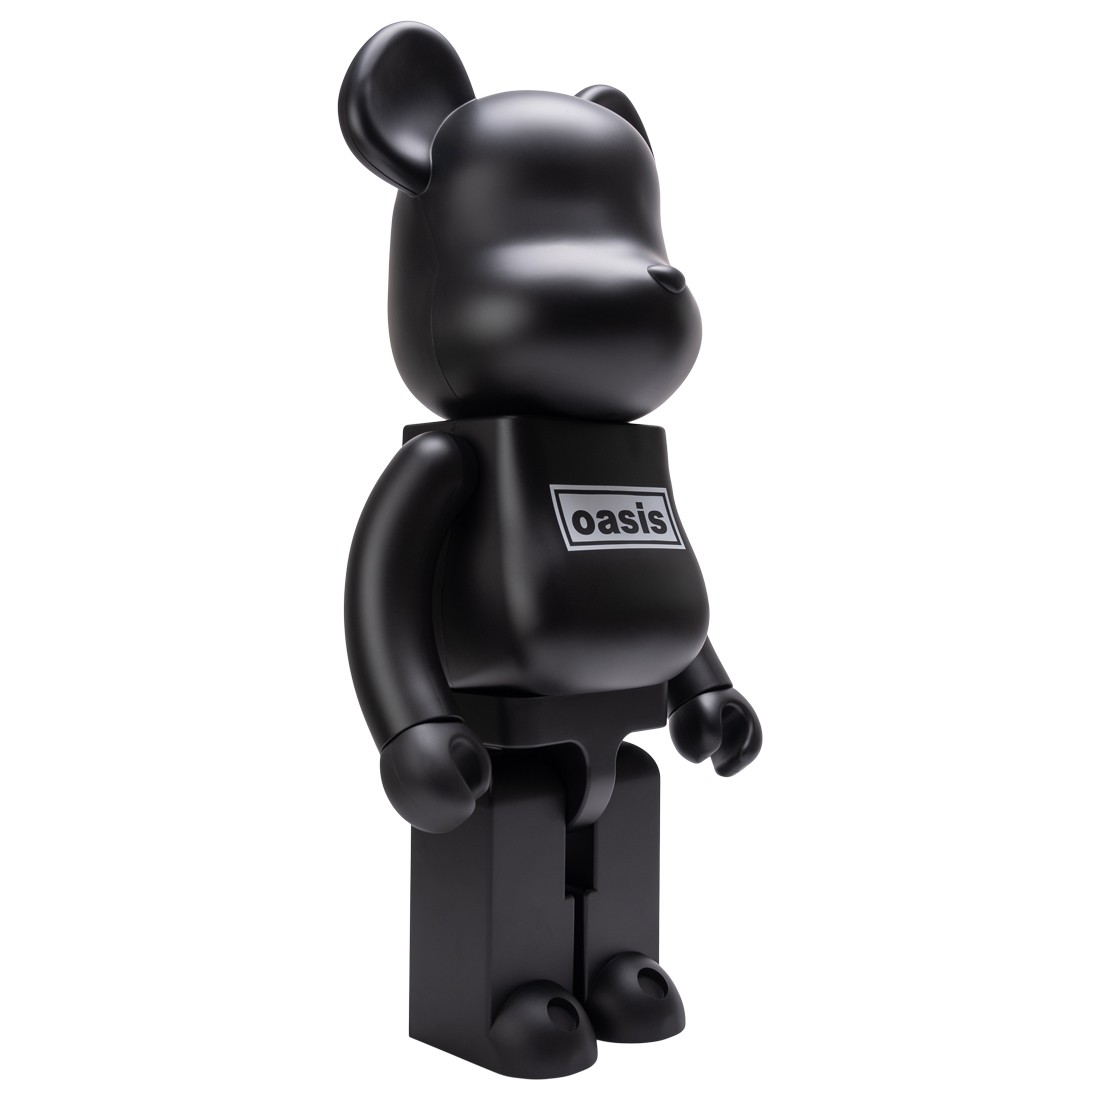 Medicom Oasis Merchandising Black Rubber 1000% Bearbrick Figure (black)